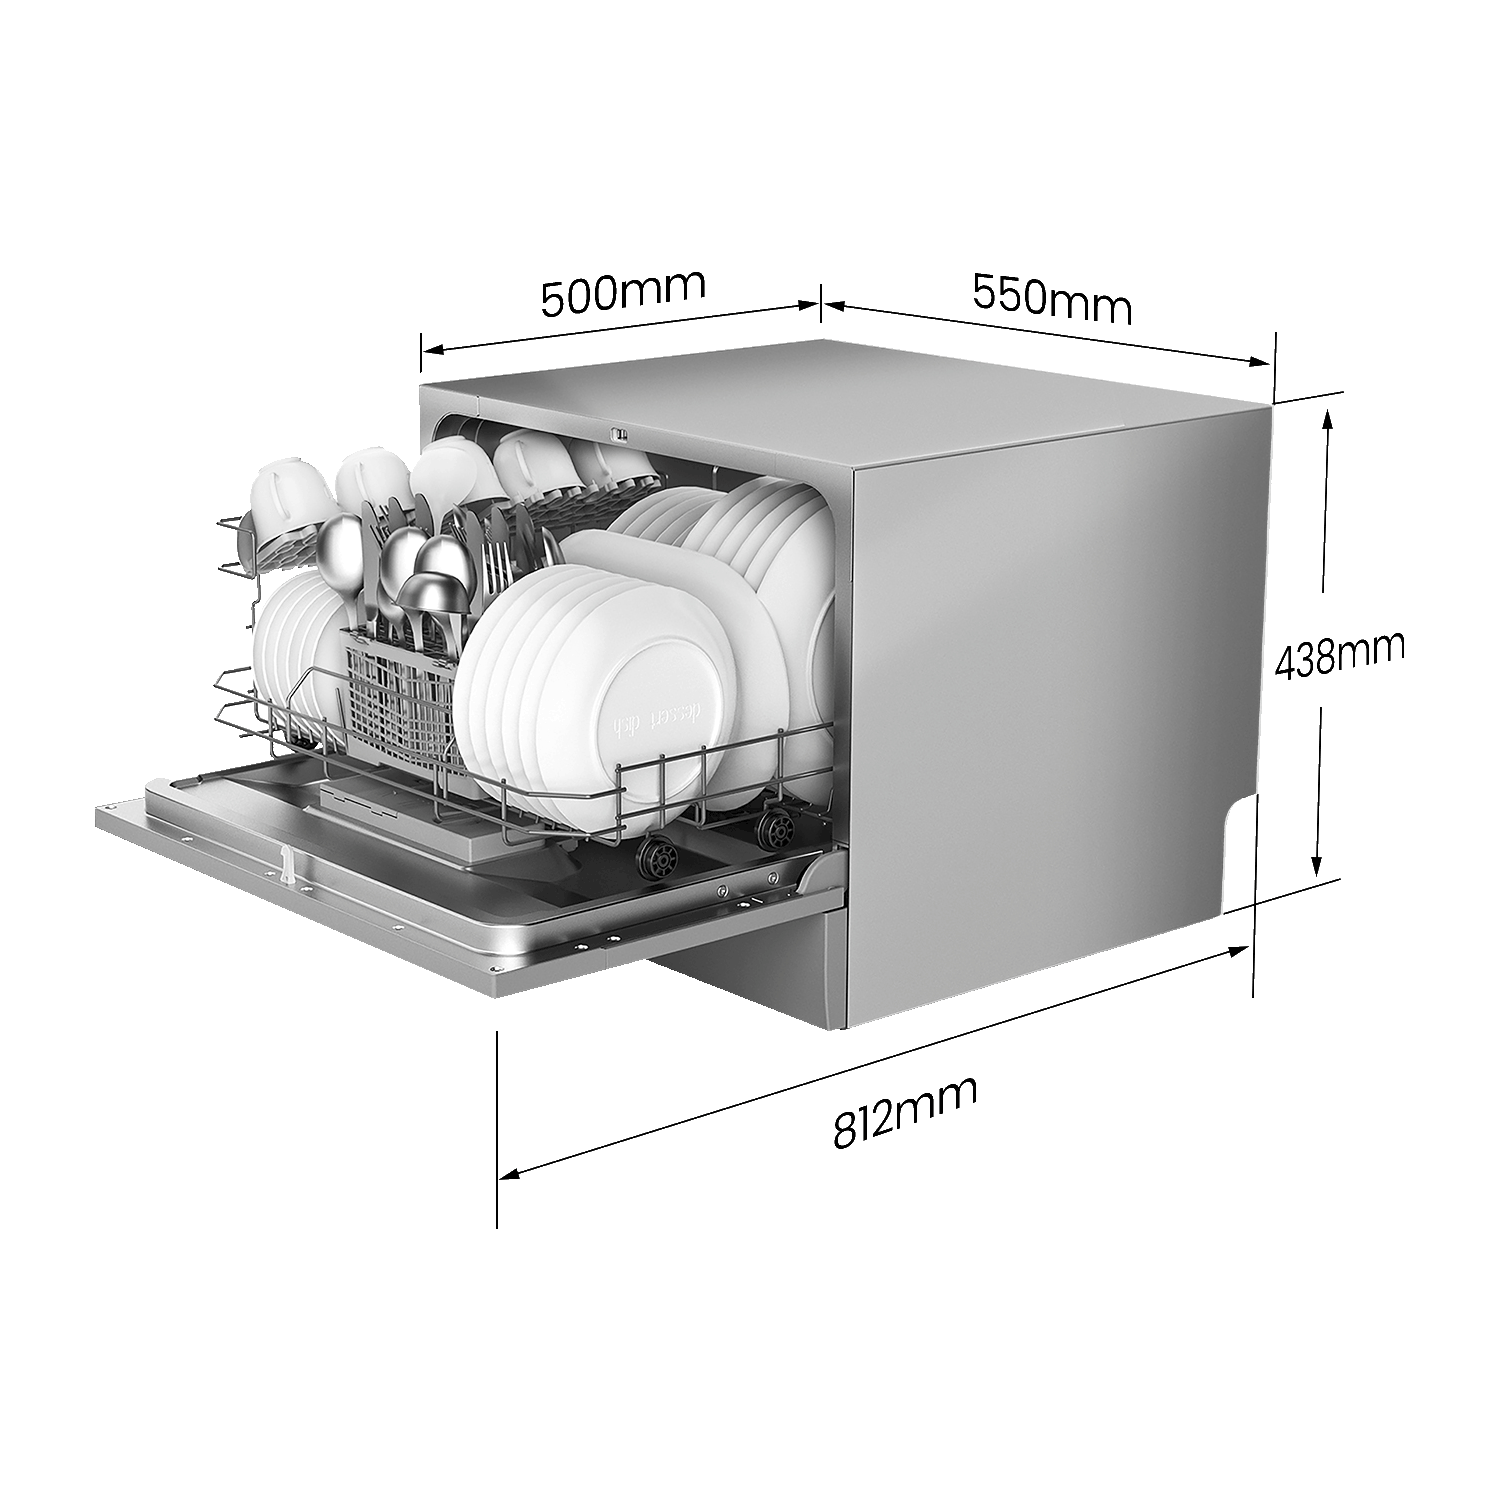 COMFEE' Portable Dishwasher Countertop Dishwasher